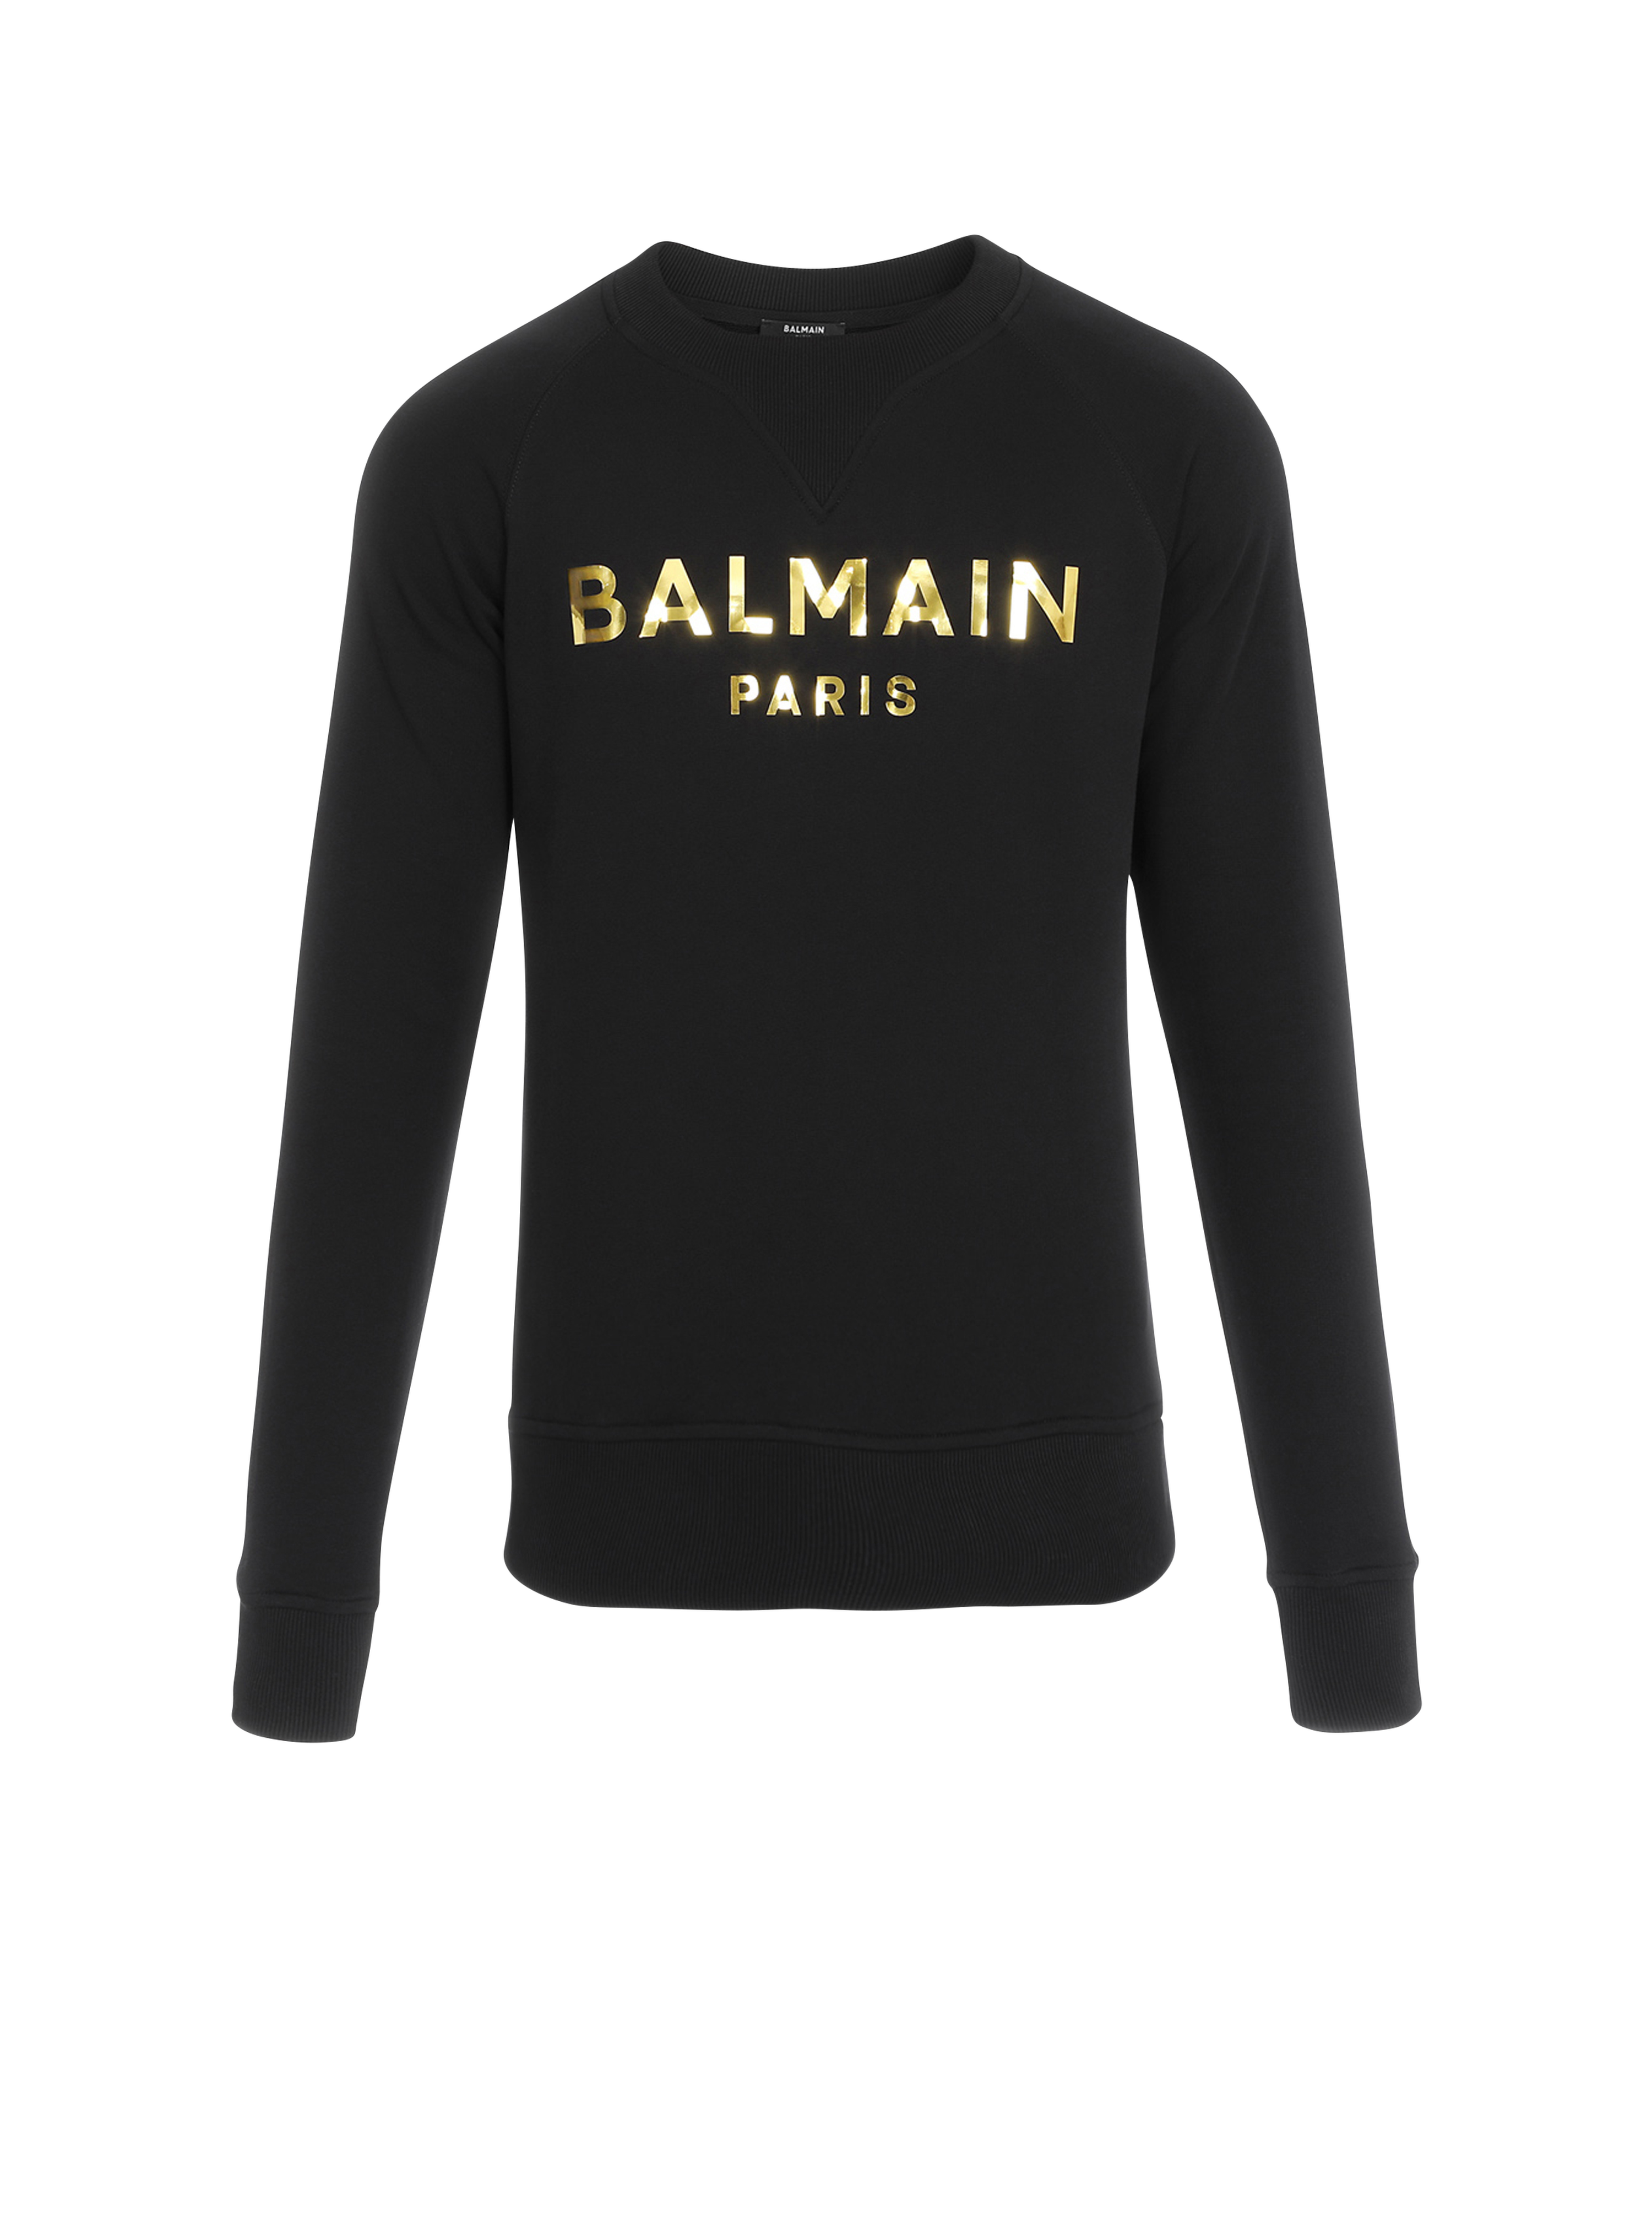 Sweatshirt aus Baumwolle mit „Balmain Paris”-Logo-Print in Metallic-Optik, golden